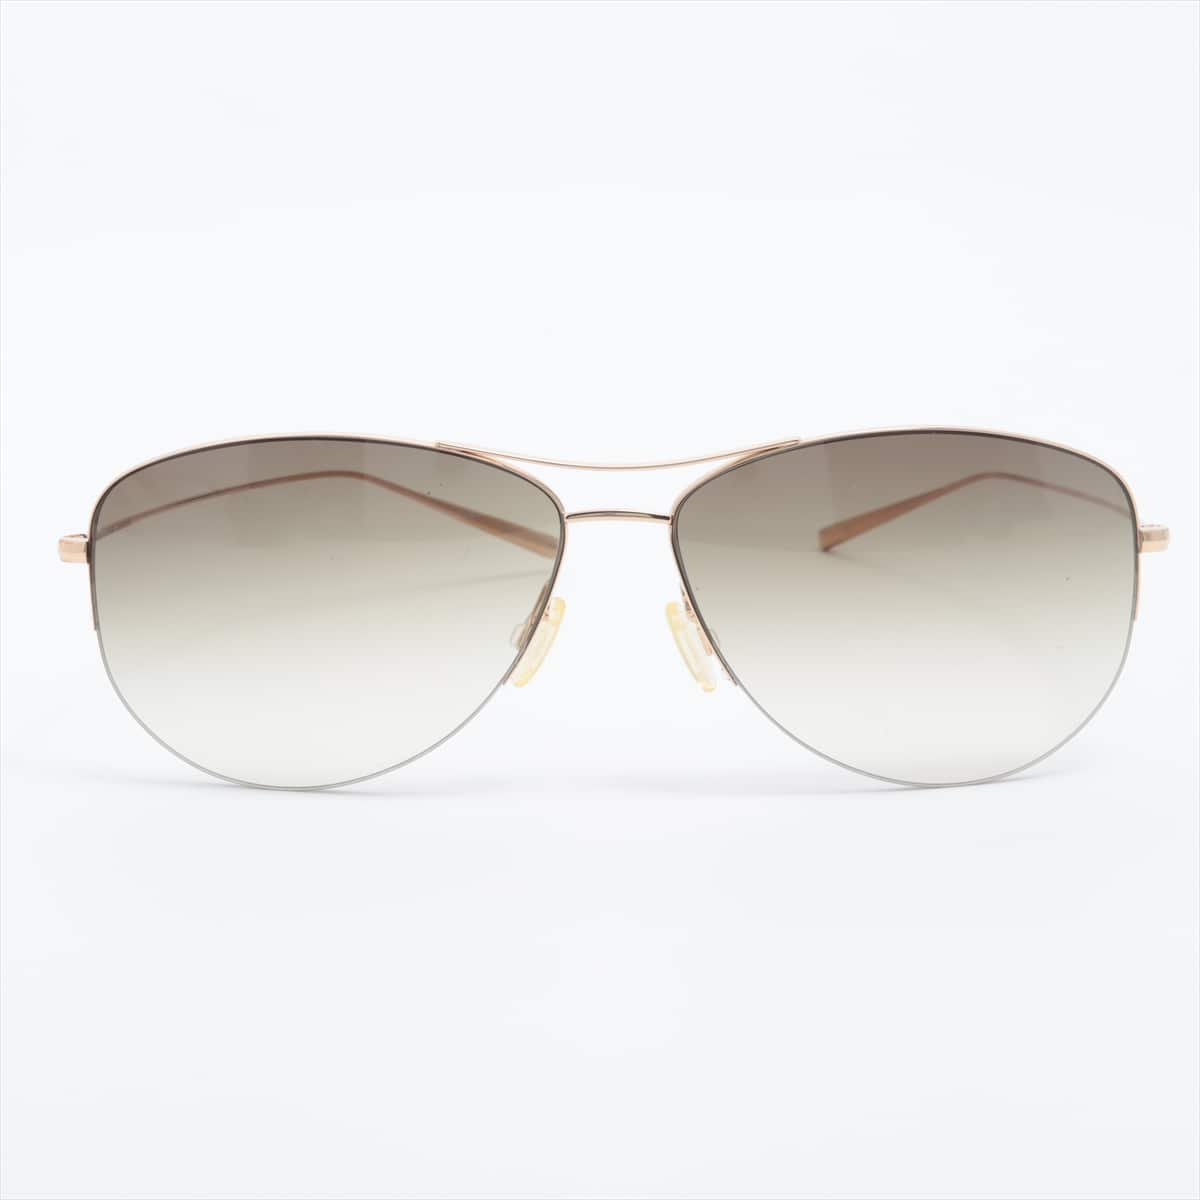 Oliver Peoples Sunglasses metal Gold